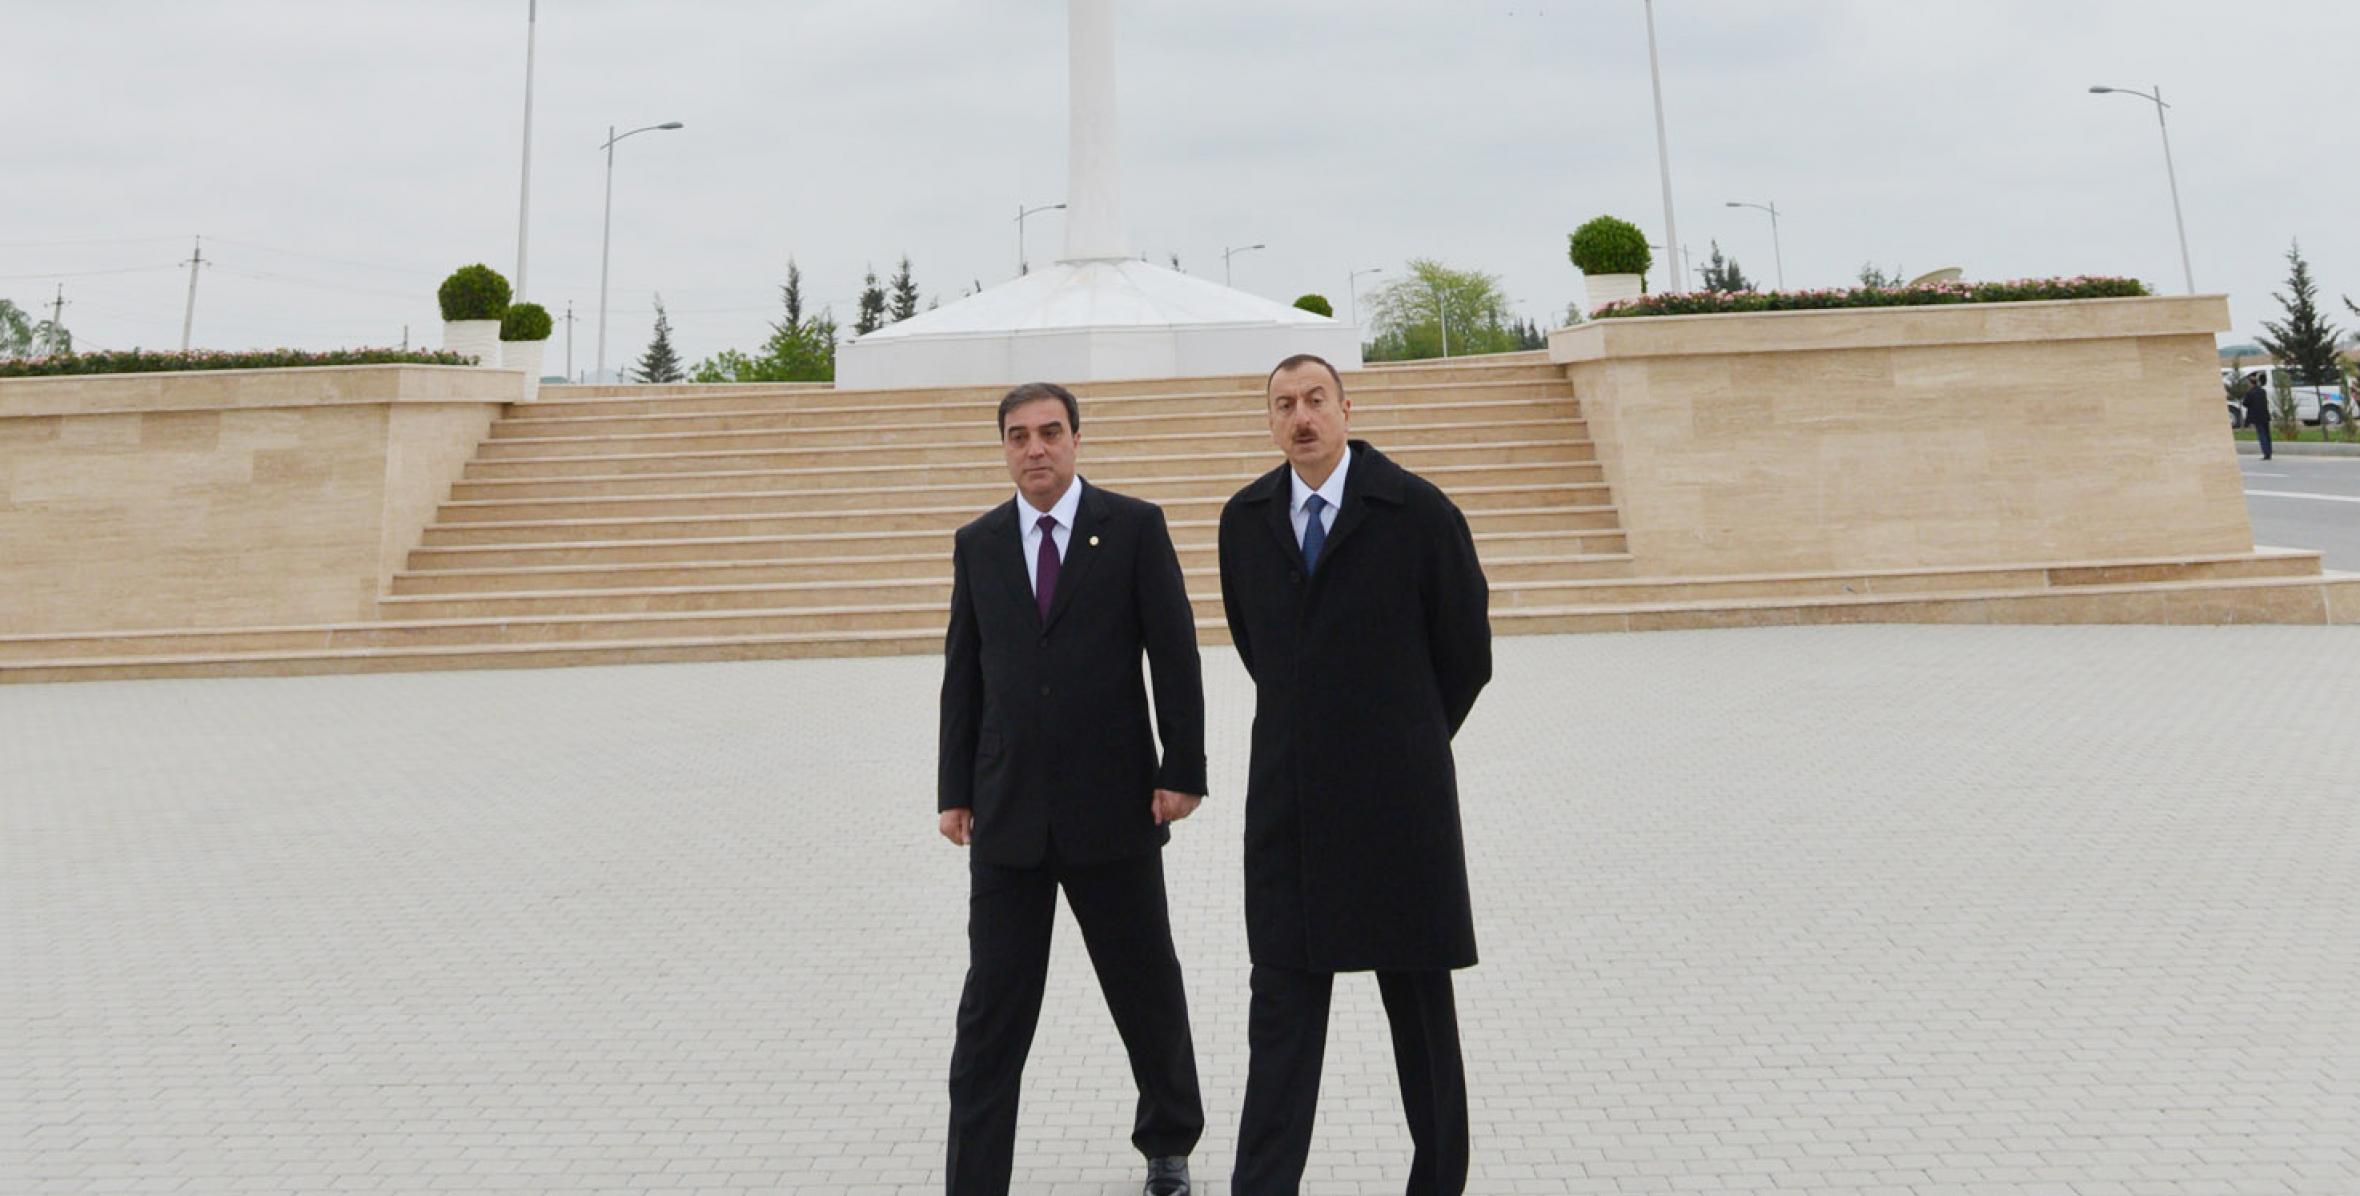 Ilham Aliyev reviewed the Flag Square in Mingachevir